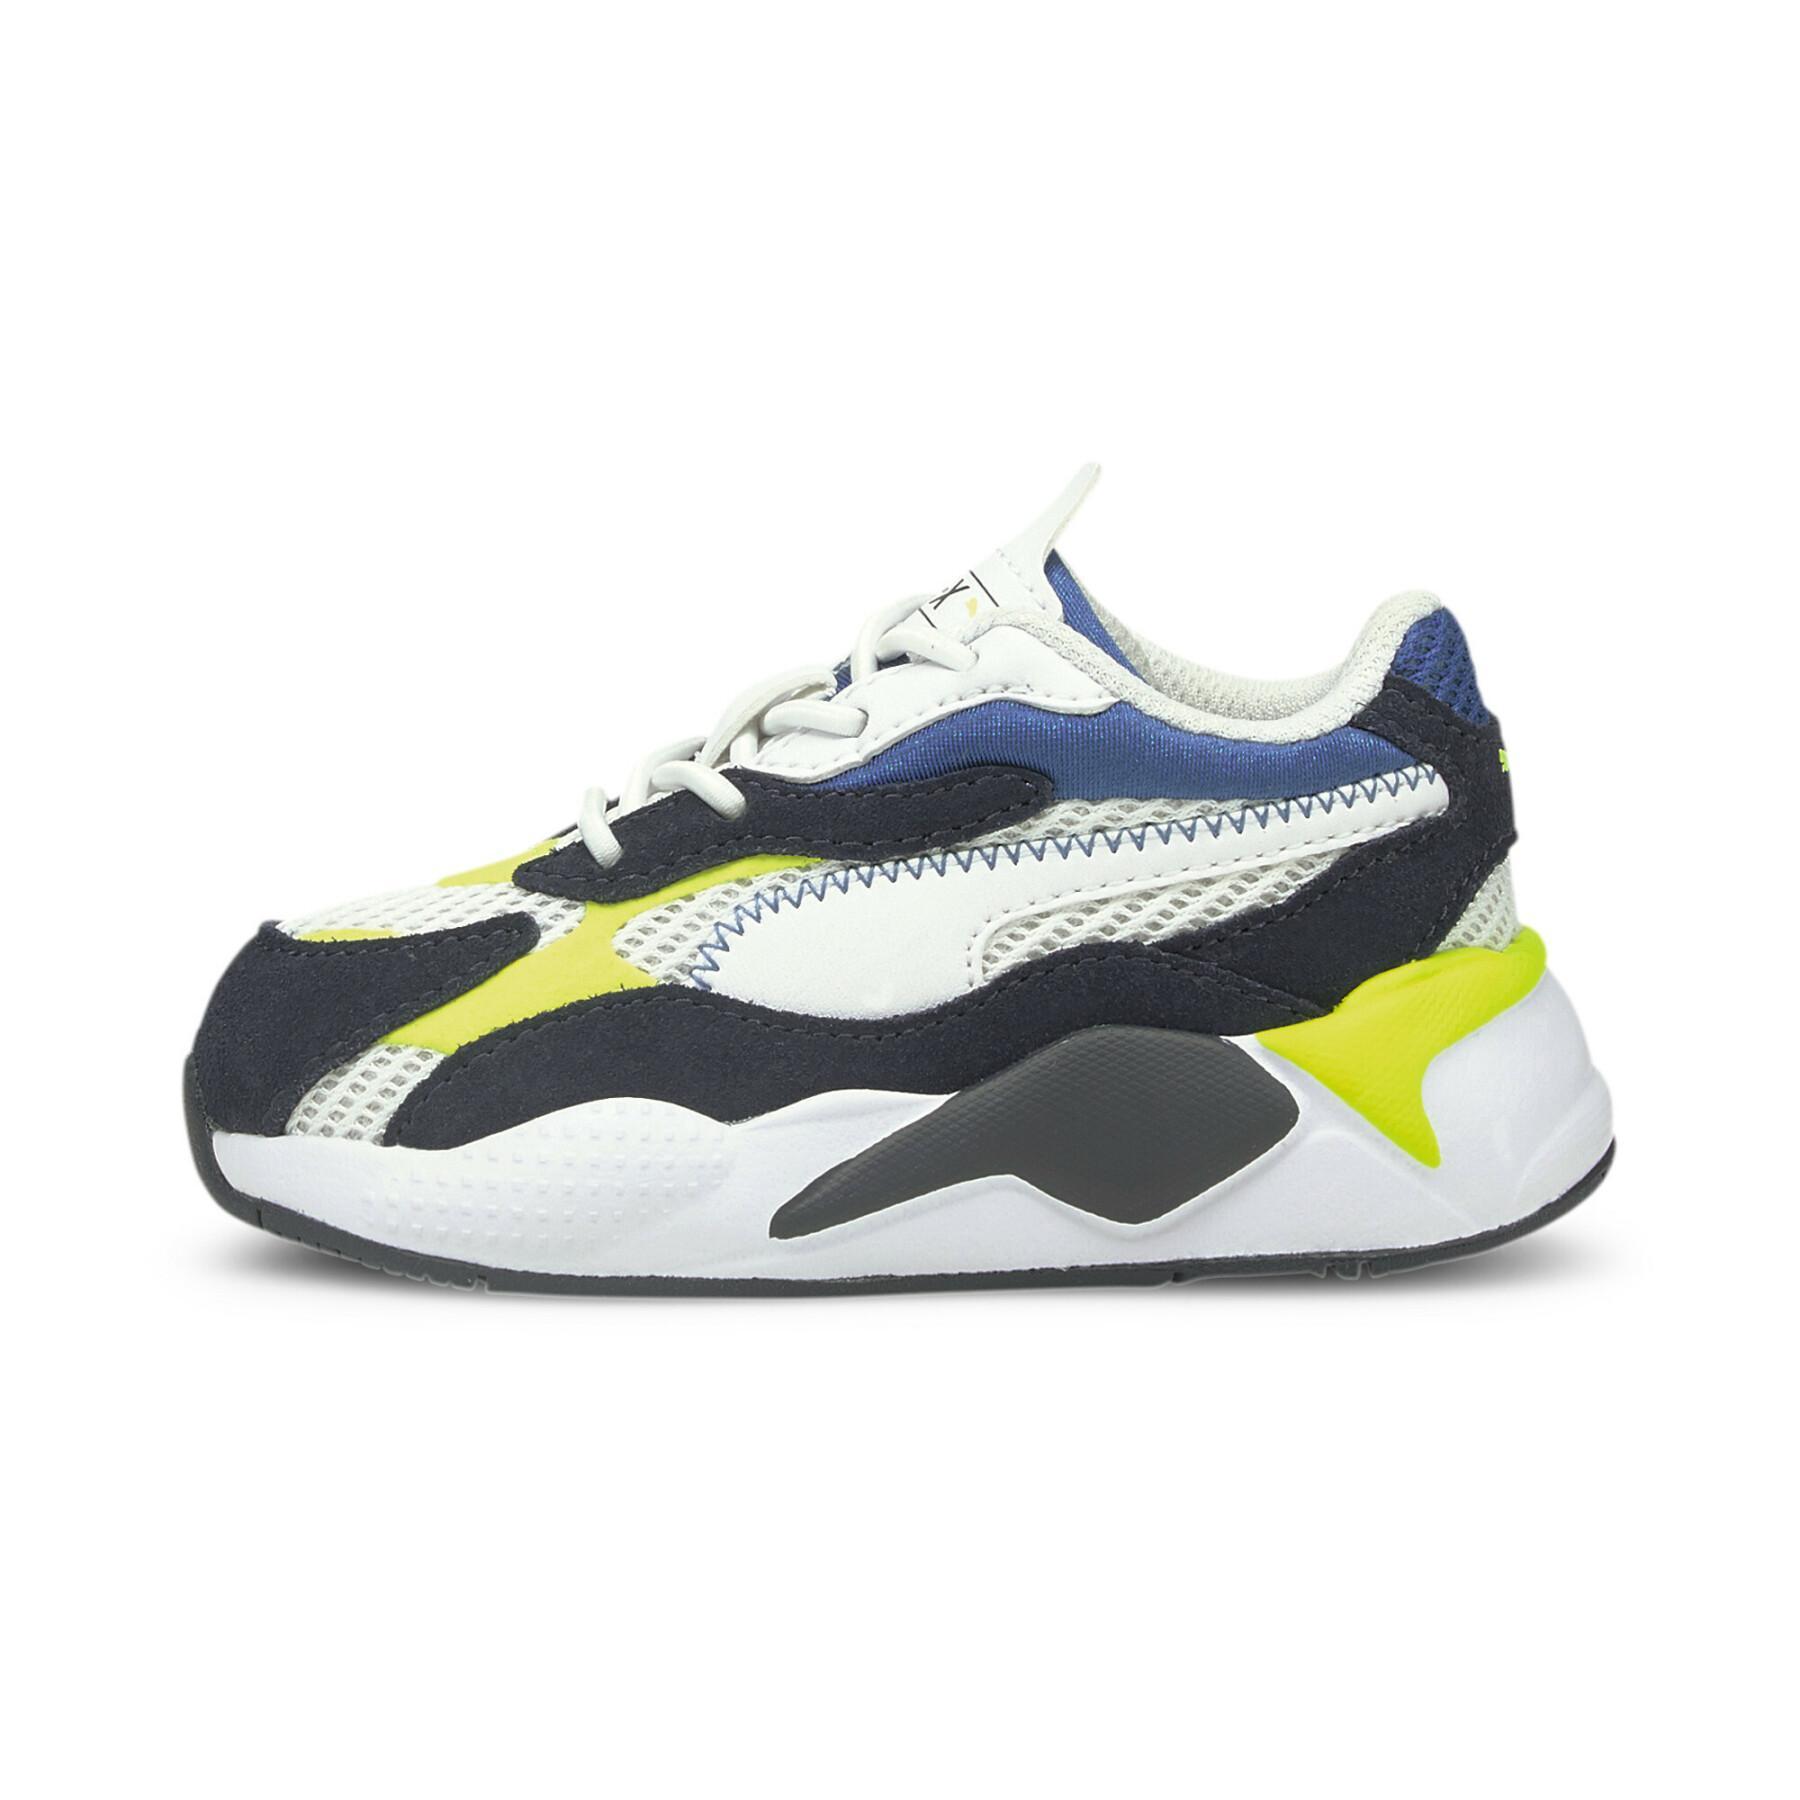 Children's sneakers Puma RS-X³ Twill AirMesh AC